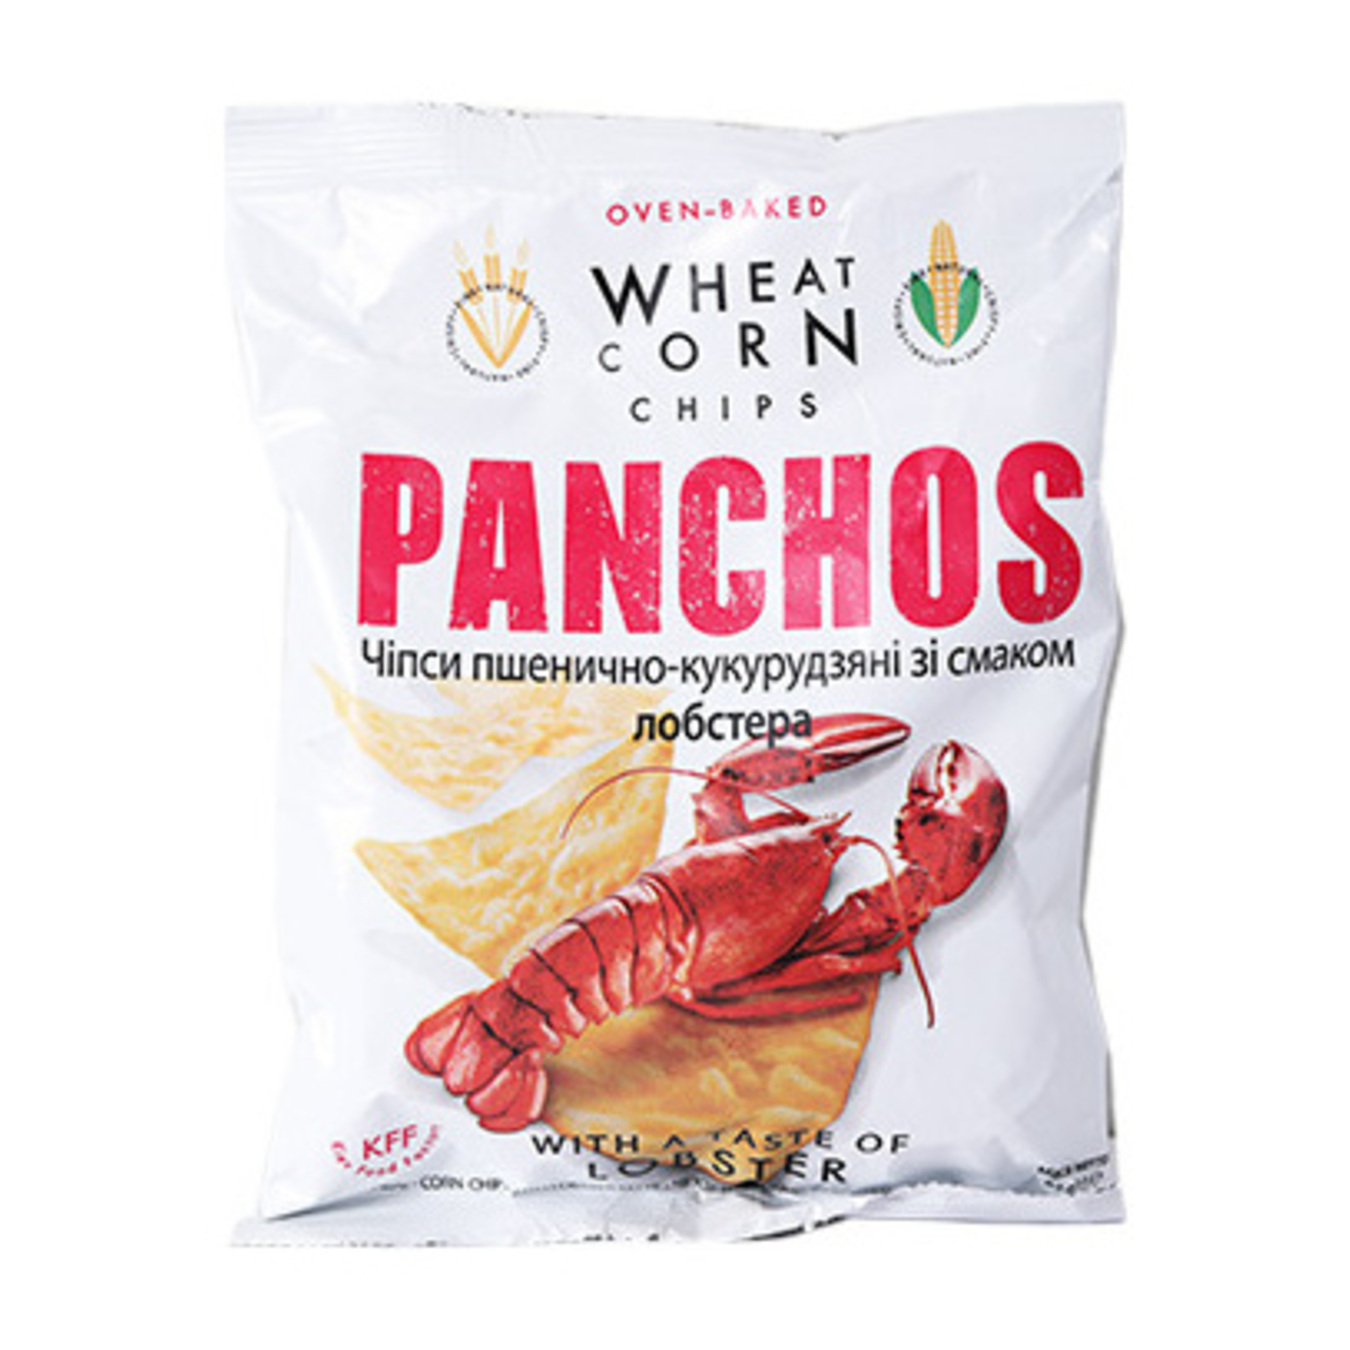 Чіпси Panchos пшенично-кукурудзяні зі смаком лобстера 82г